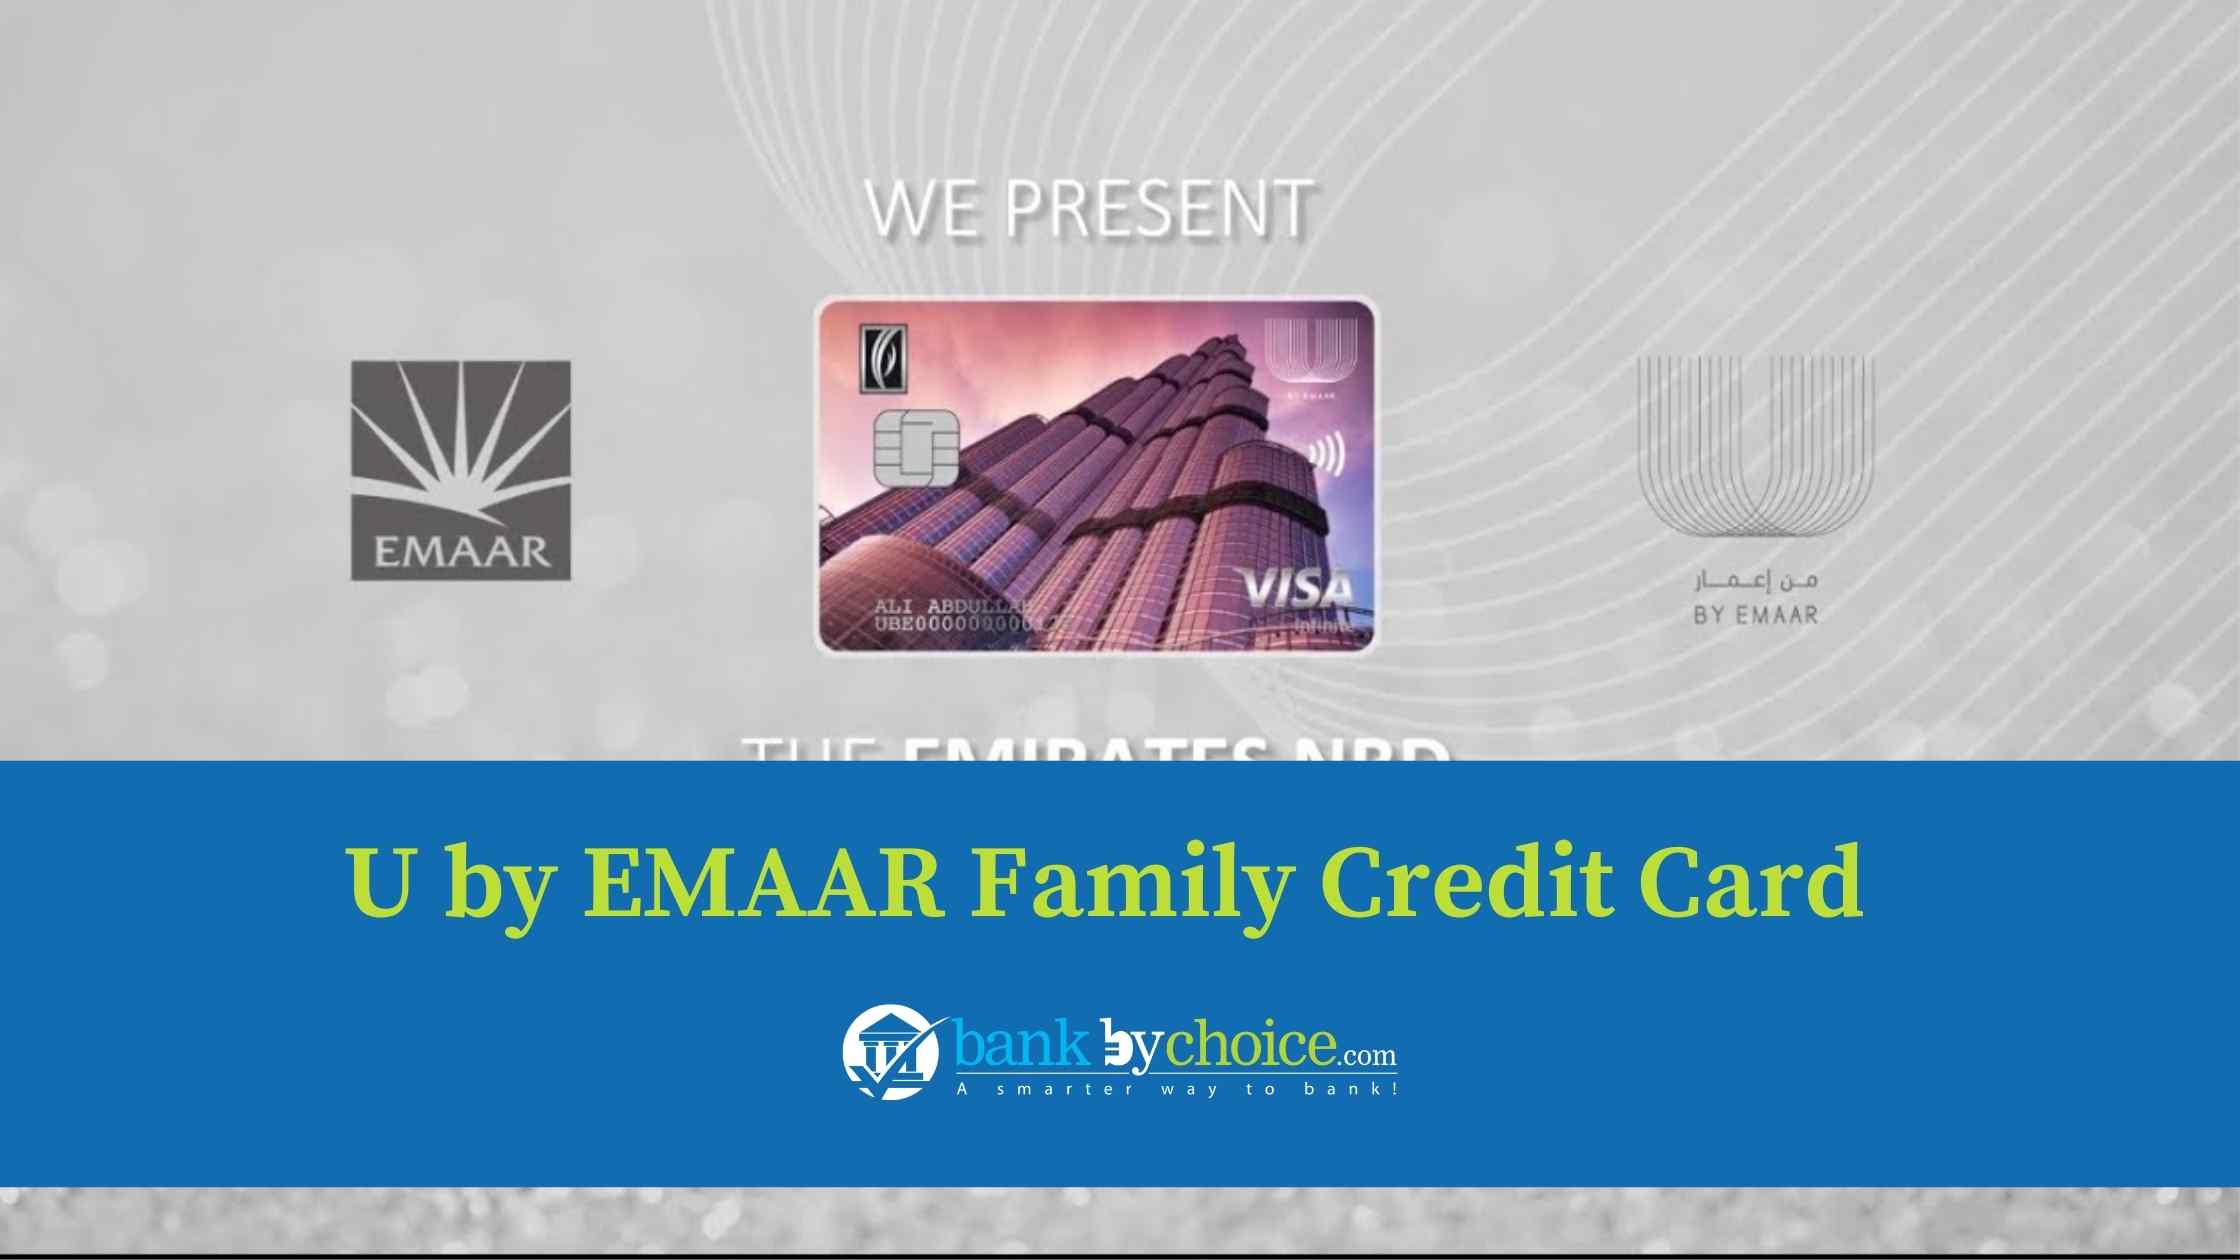 U by Emaar family credit card- Bankbychoice